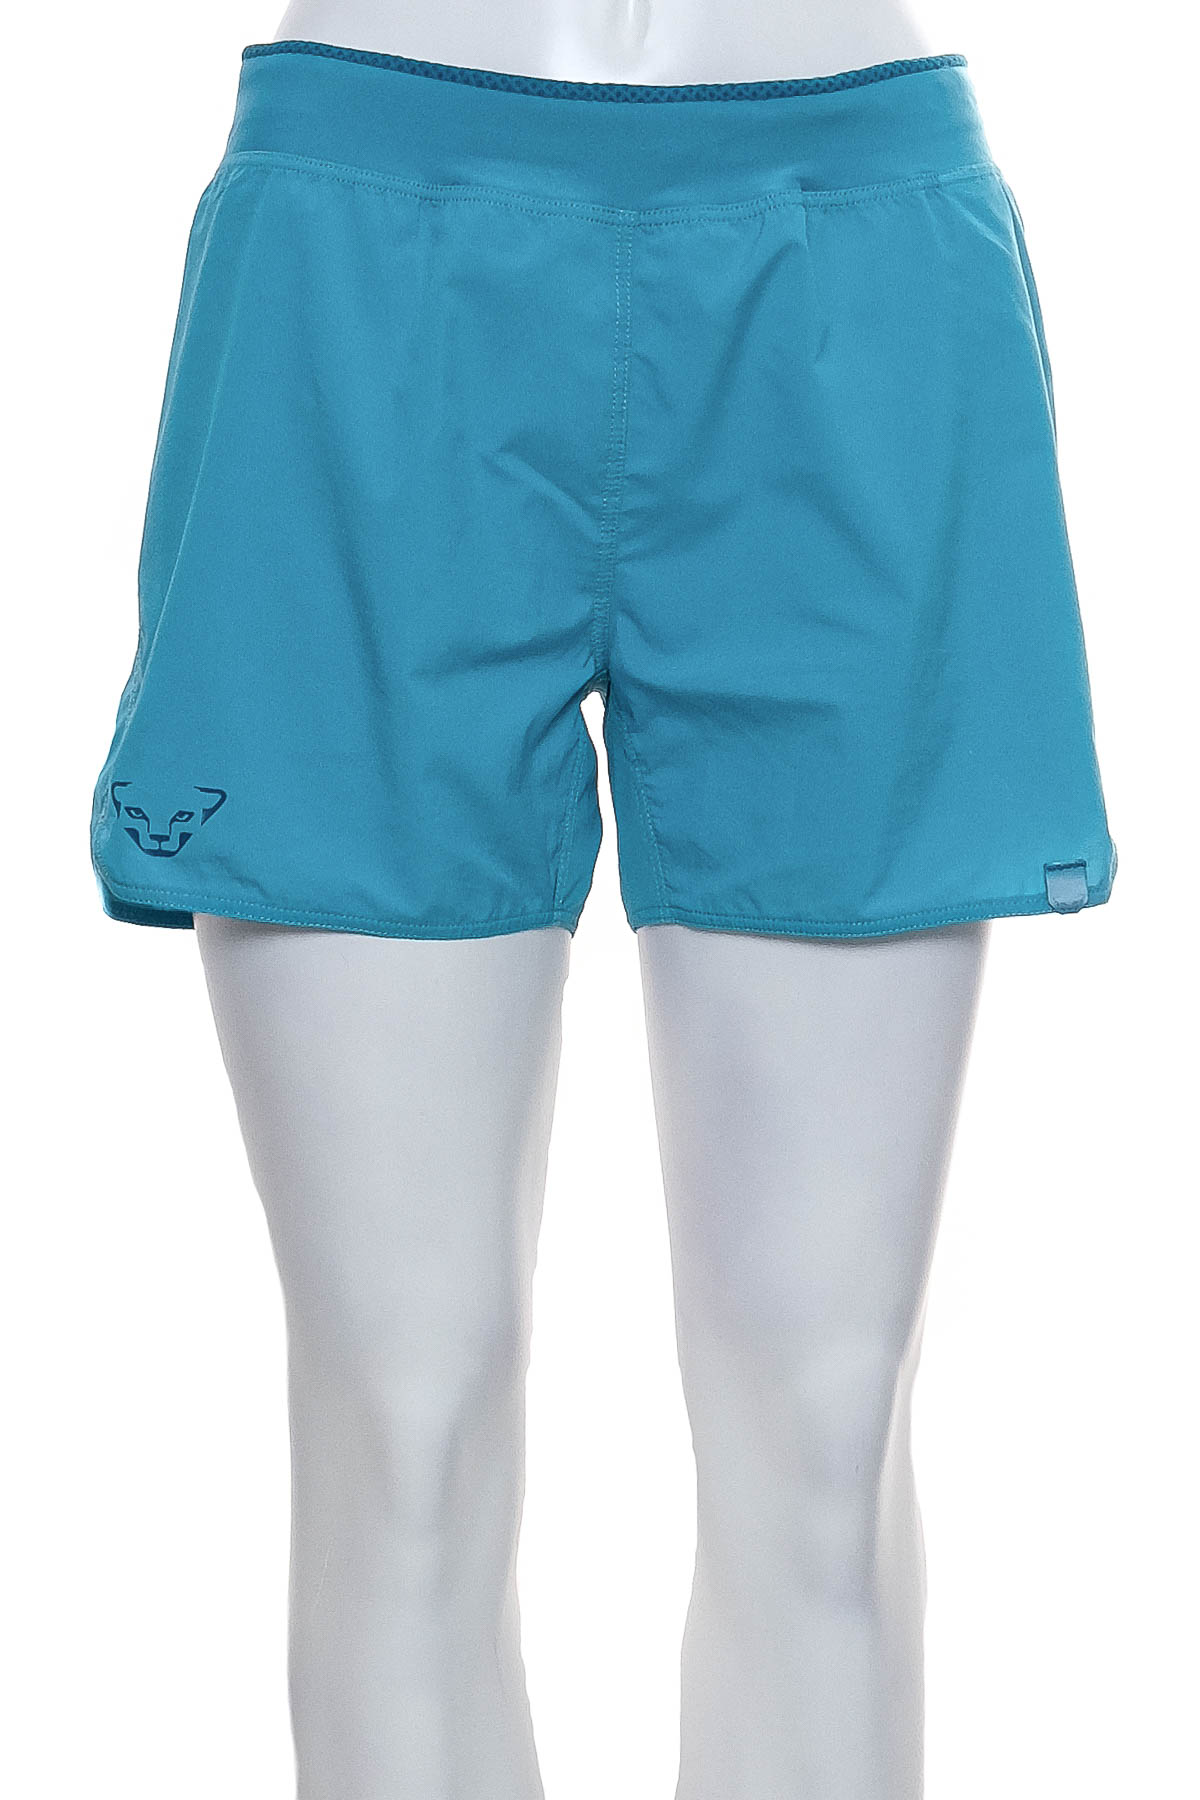 Women's shorts - DYNAFIT - 0